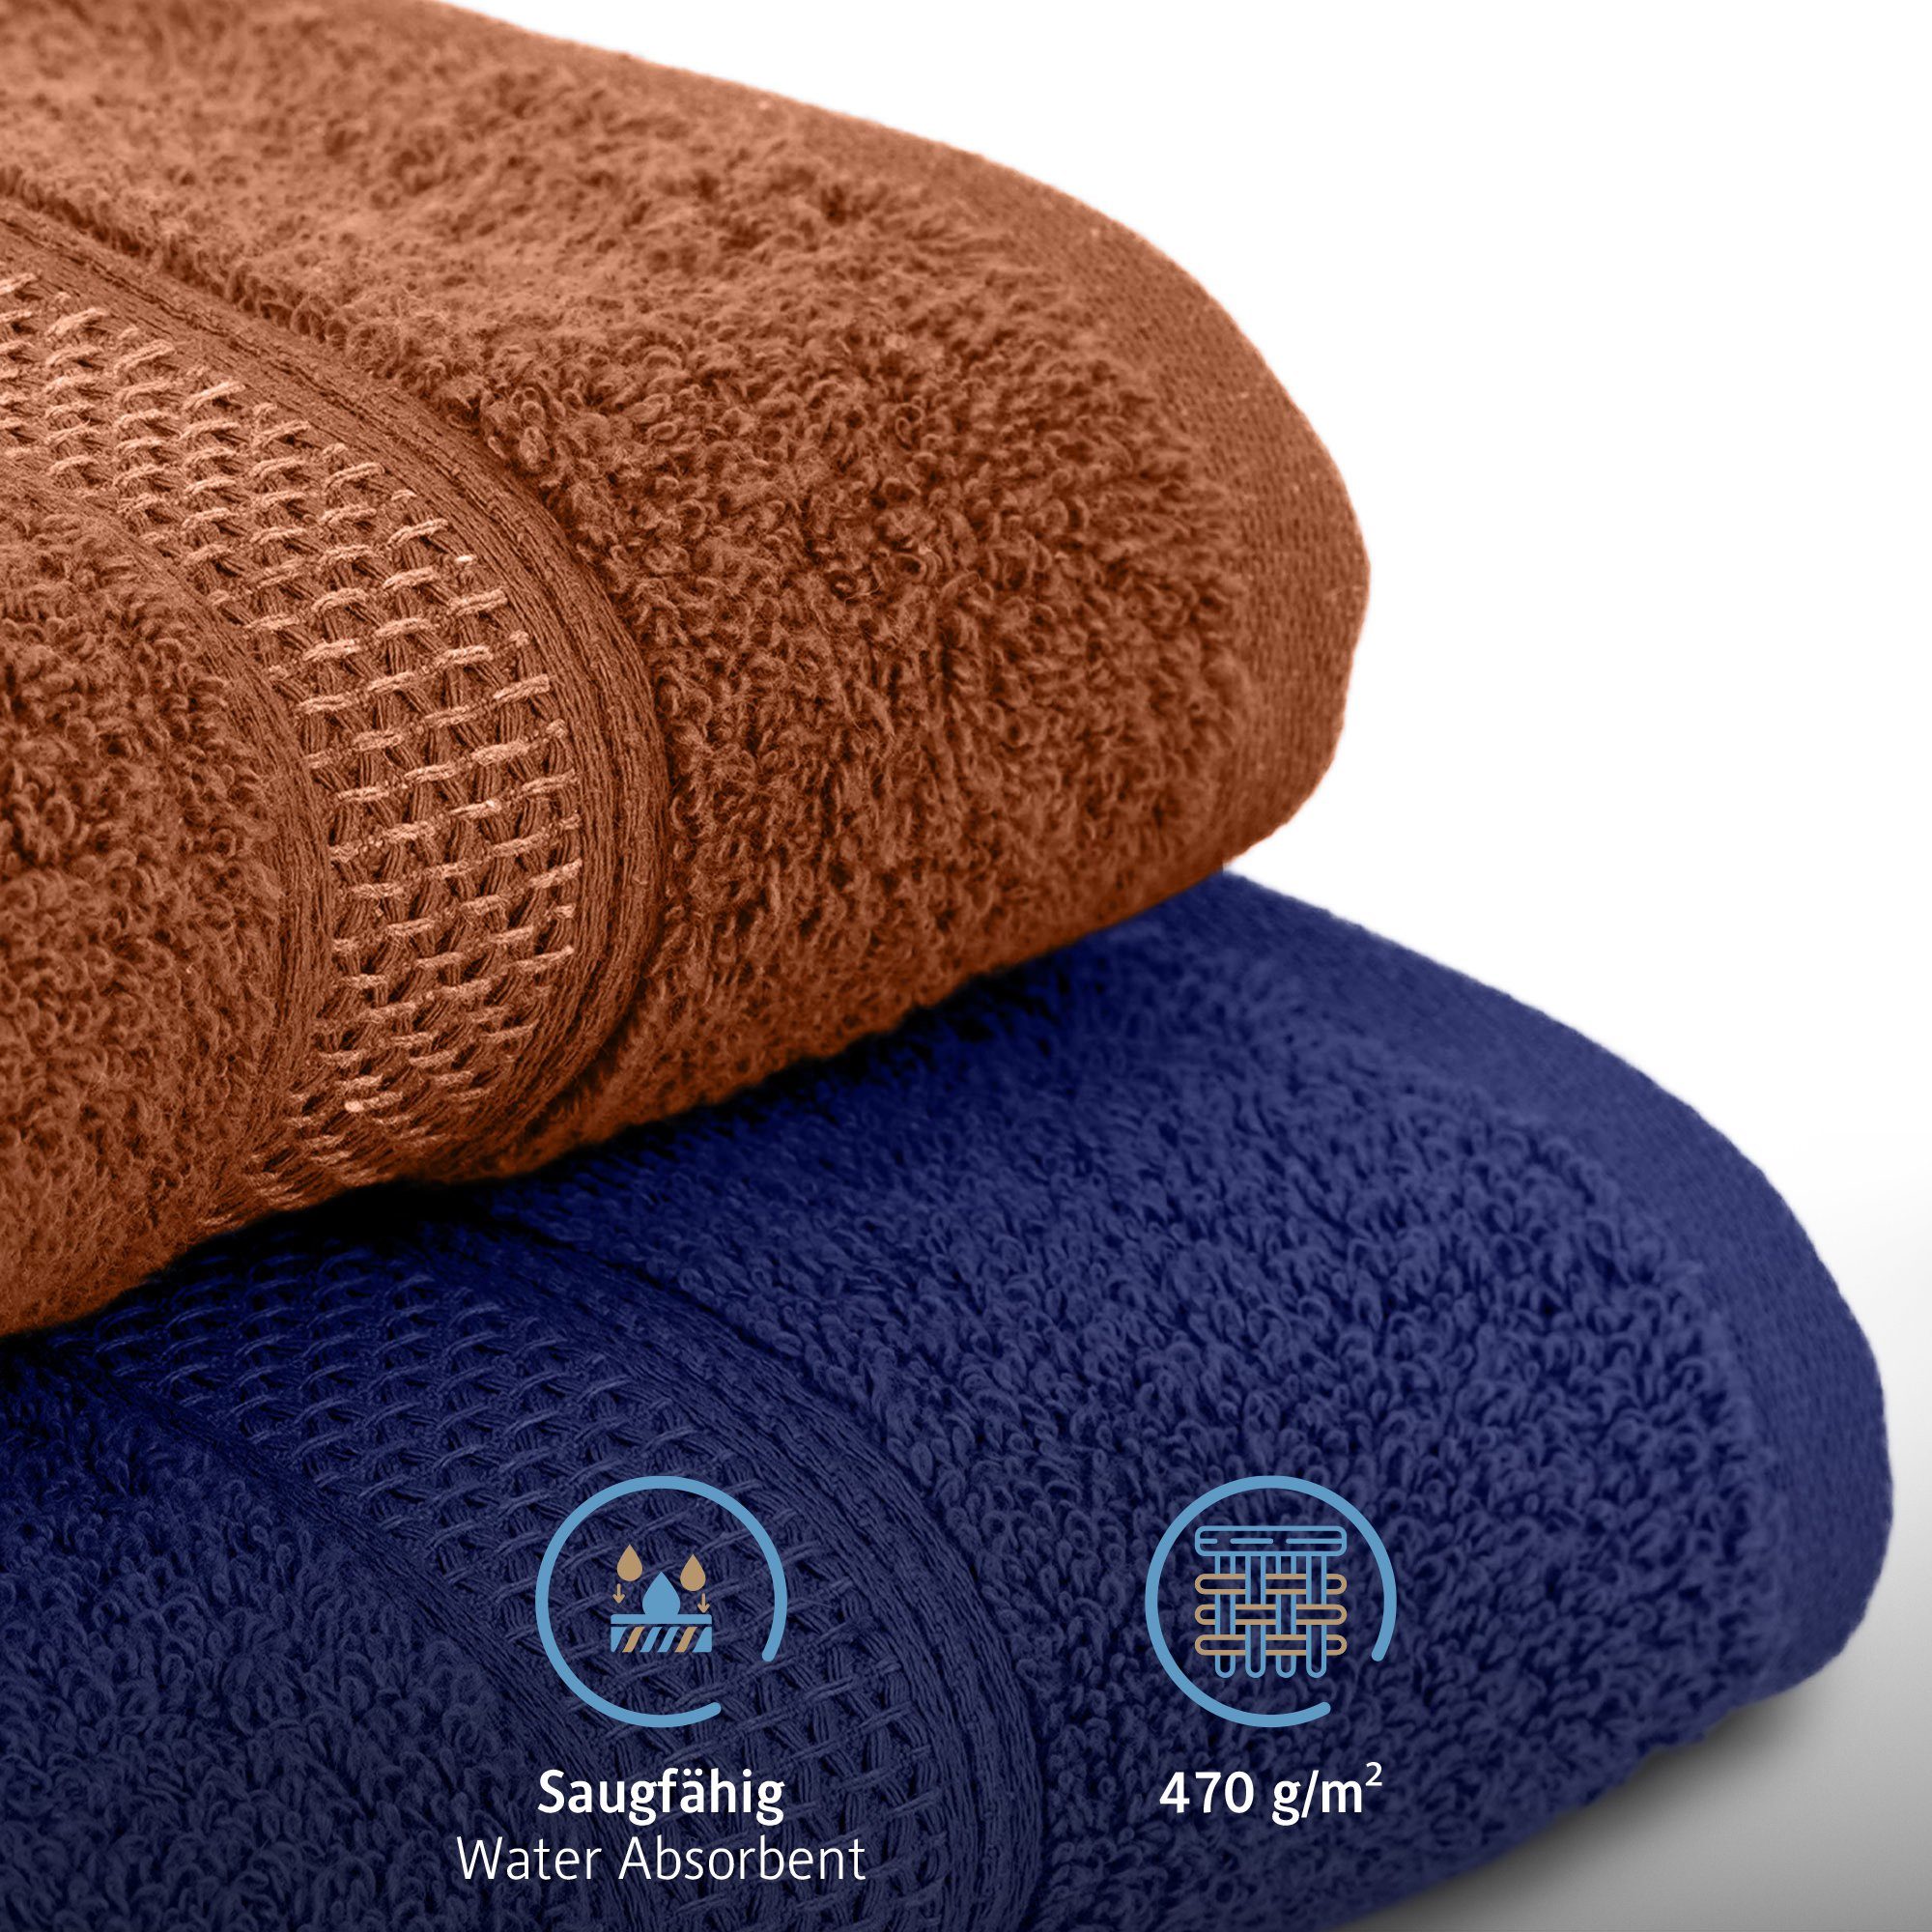 Komfortec Handtücher 100% Baumwolle, 470 Set, (2-St), 50x100 cm Braun&Navyblau Frottee Badetücher Weich g/m²